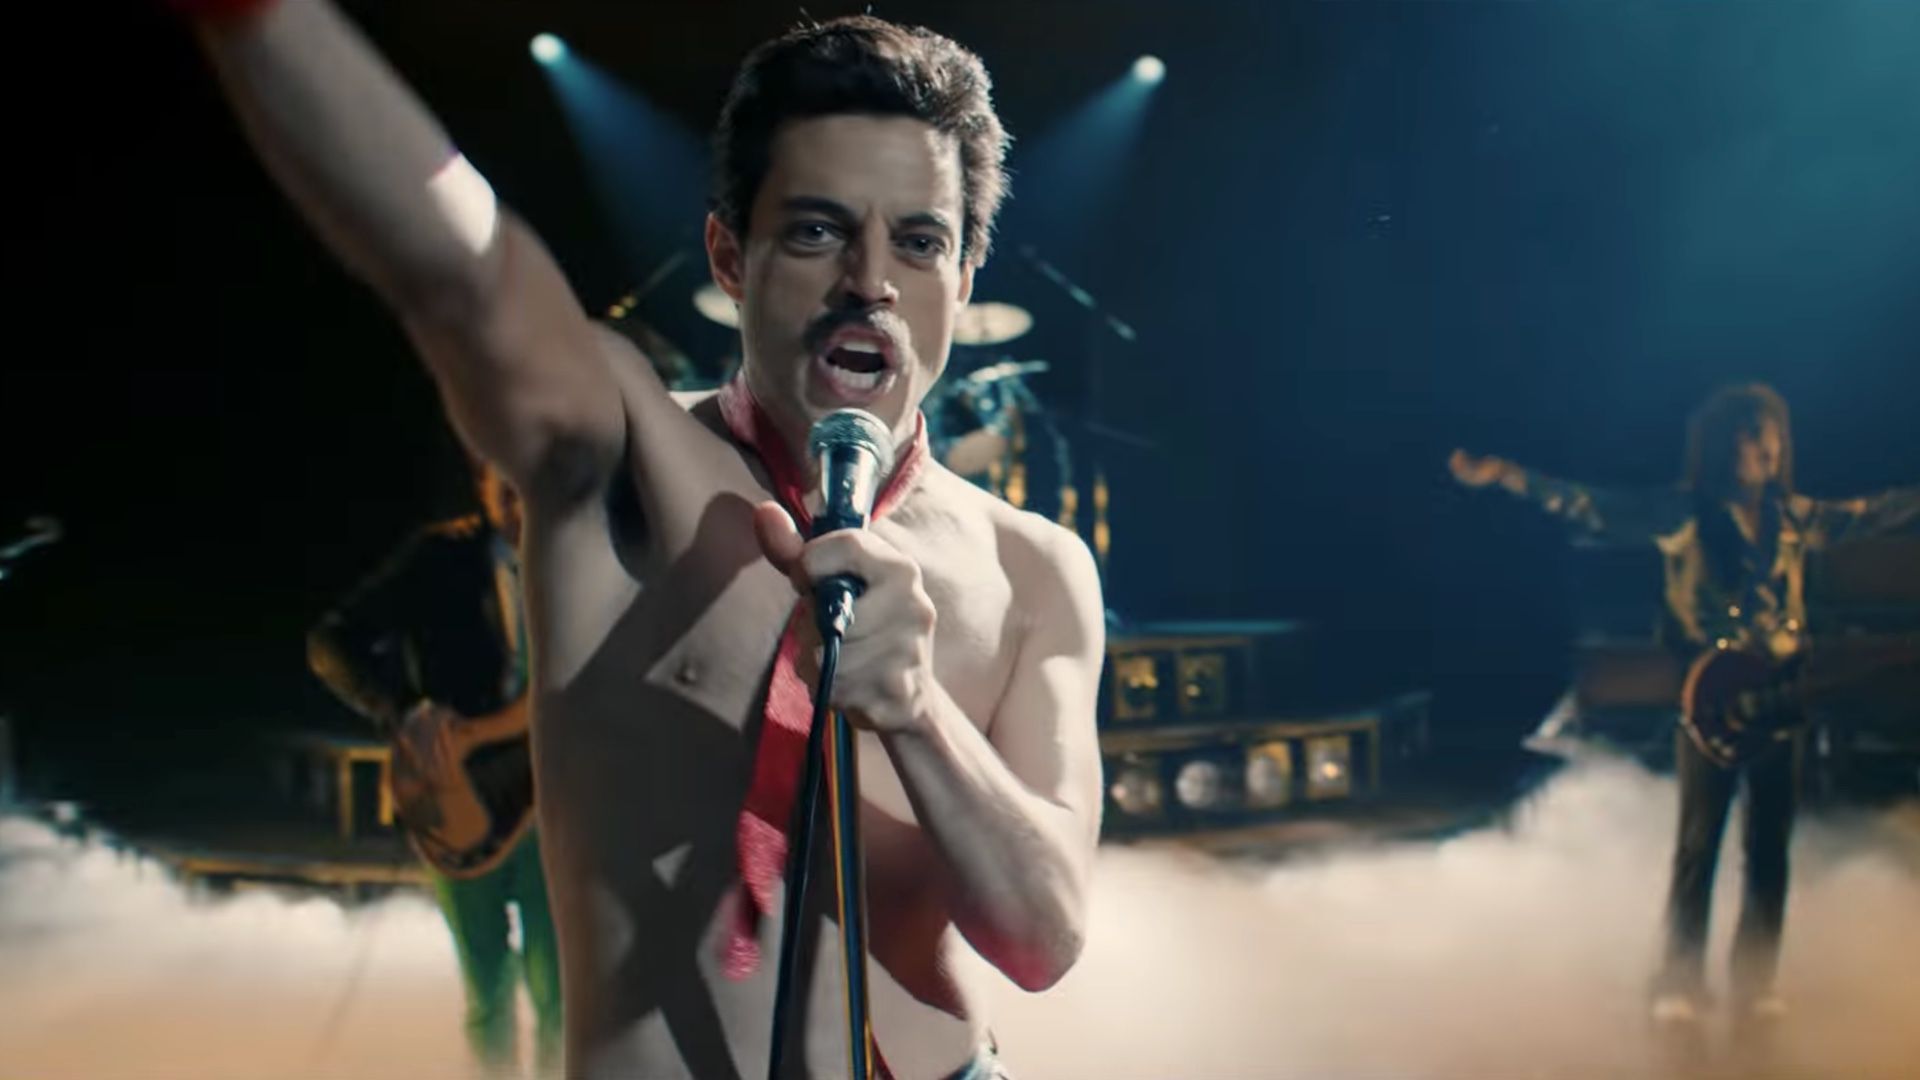 Bohemian Rhapsody - We Are The Champions - Live Aid Full Scene (Rami Malek)